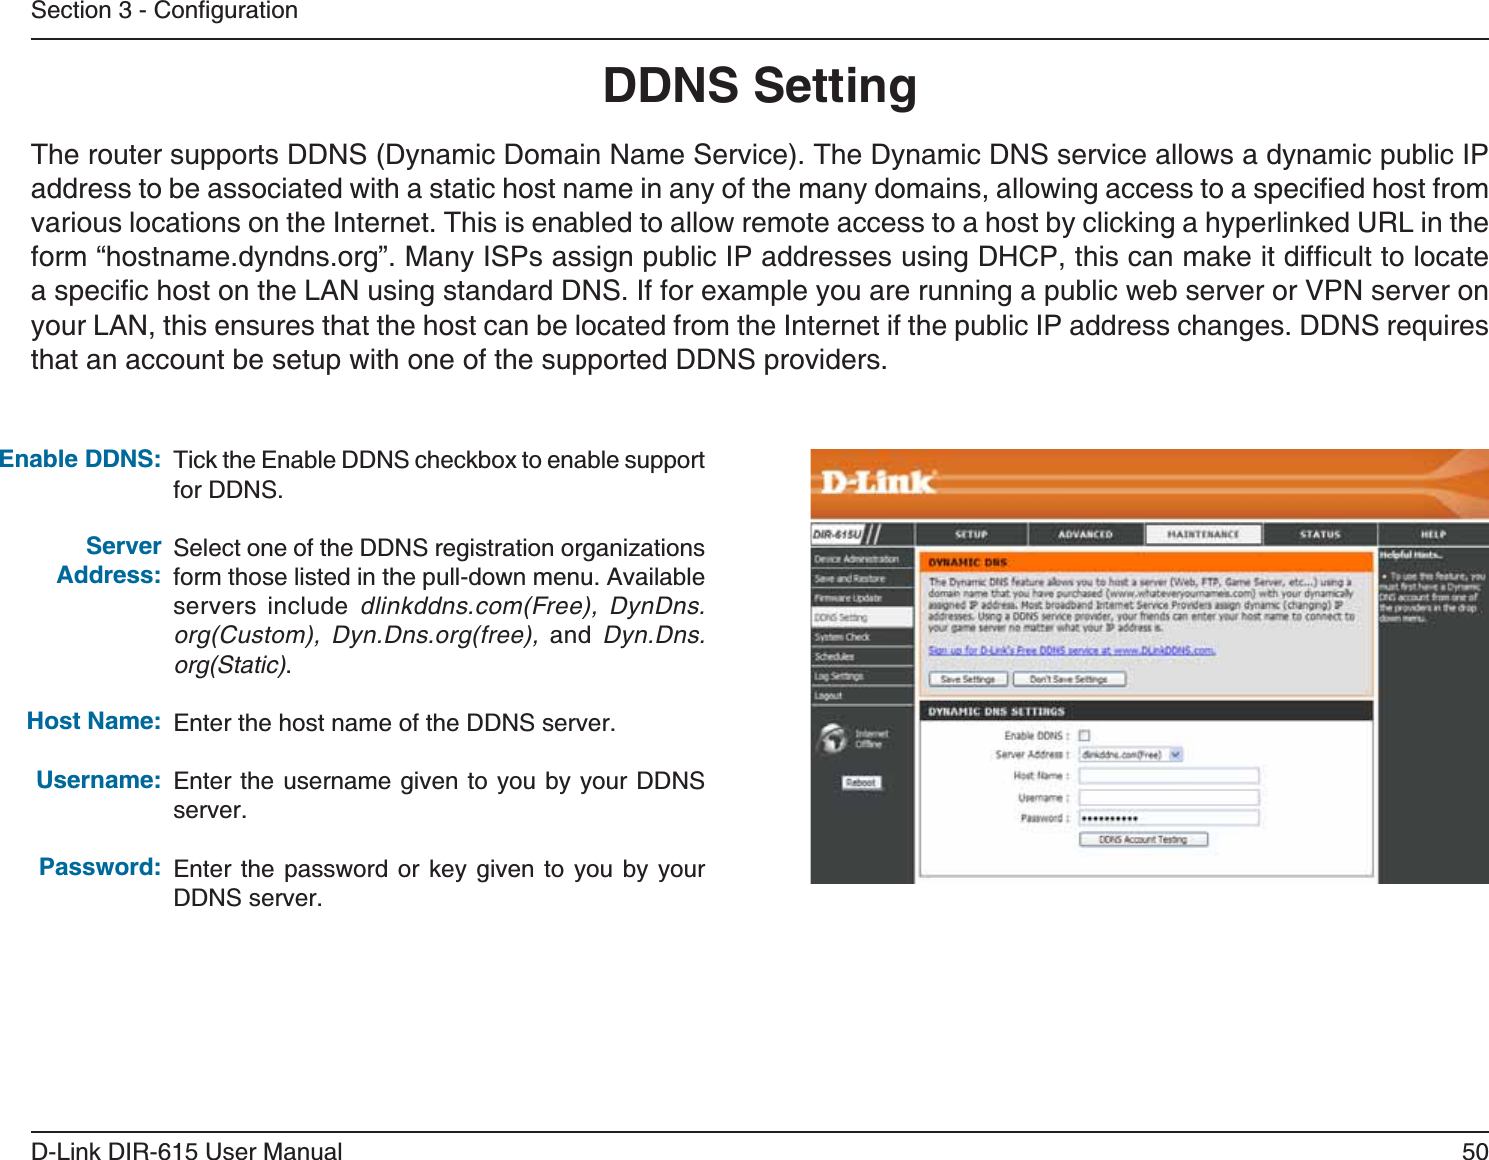 50D-Link DIR-615 User Manual5GEVKQP%QPſIWTCVKQP&amp;&amp;055GVVKPI6KEMVJG&apos;PCDNG&amp;&amp;05EJGEMDQZVQGPCDNGUWRRQTVfor DDNS.Select one of the DDNS registration organizations form those listed in the pull-down menu. Available servers include dlinkddns.com(Free), DynDns.org(Custom), Dyn.Dns.org(free), and  Dyn.Dns.org(Static).Enter the host name of the DDNS server.Enter the username given to you by your DDNS server.Enter the password or key given to you by your DDNS server.&apos;PCDNG&amp;&amp;055GTXGT#FFTGUU*QUV0COG7UGTPCOG2CUUYQTFThe router supports DDNS (Dynamic Domain Name Service). The Dynamic DNS service allows a dynamic public IP CFFTGUUVQDGCUUQEKCVGFYKVJCUVCVKEJQUVPCOGKPCP[QHVJGOCP[FQOCKPUCNNQYKPICEEGUUVQCURGEKſGFJQUVHTQOvarious locations on the Internet. This is enabled to allow remote access to a host by clicking a hyperlinked URL in the HQTOőJQUVPCOGF[PFPUQTIŒ/CP[+52UCUUKIPRWDNKE+2CFFTGUUGUWUKPI&amp;*%2VJKUECPOCMGKVFKHſEWNVVQNQECVGCURGEKſEJQUVQPVJG.#0WUKPIUVCPFCTF&amp;05+HHQTGZCORNG[QWCTGTWPPKPICRWDNKEYGDUGTXGTQT820UGTXGTQP[QWT.#0VJKUGPUWTGUVJCVVJGJQUVECPDGNQECVGFHTQOVJG+PVGTPGVKHVJGRWDNKE+2CFFTGUUEJCPIGU&amp;&amp;05TGSWKTGUthat an account be setup with one of the supported DDNS providers.